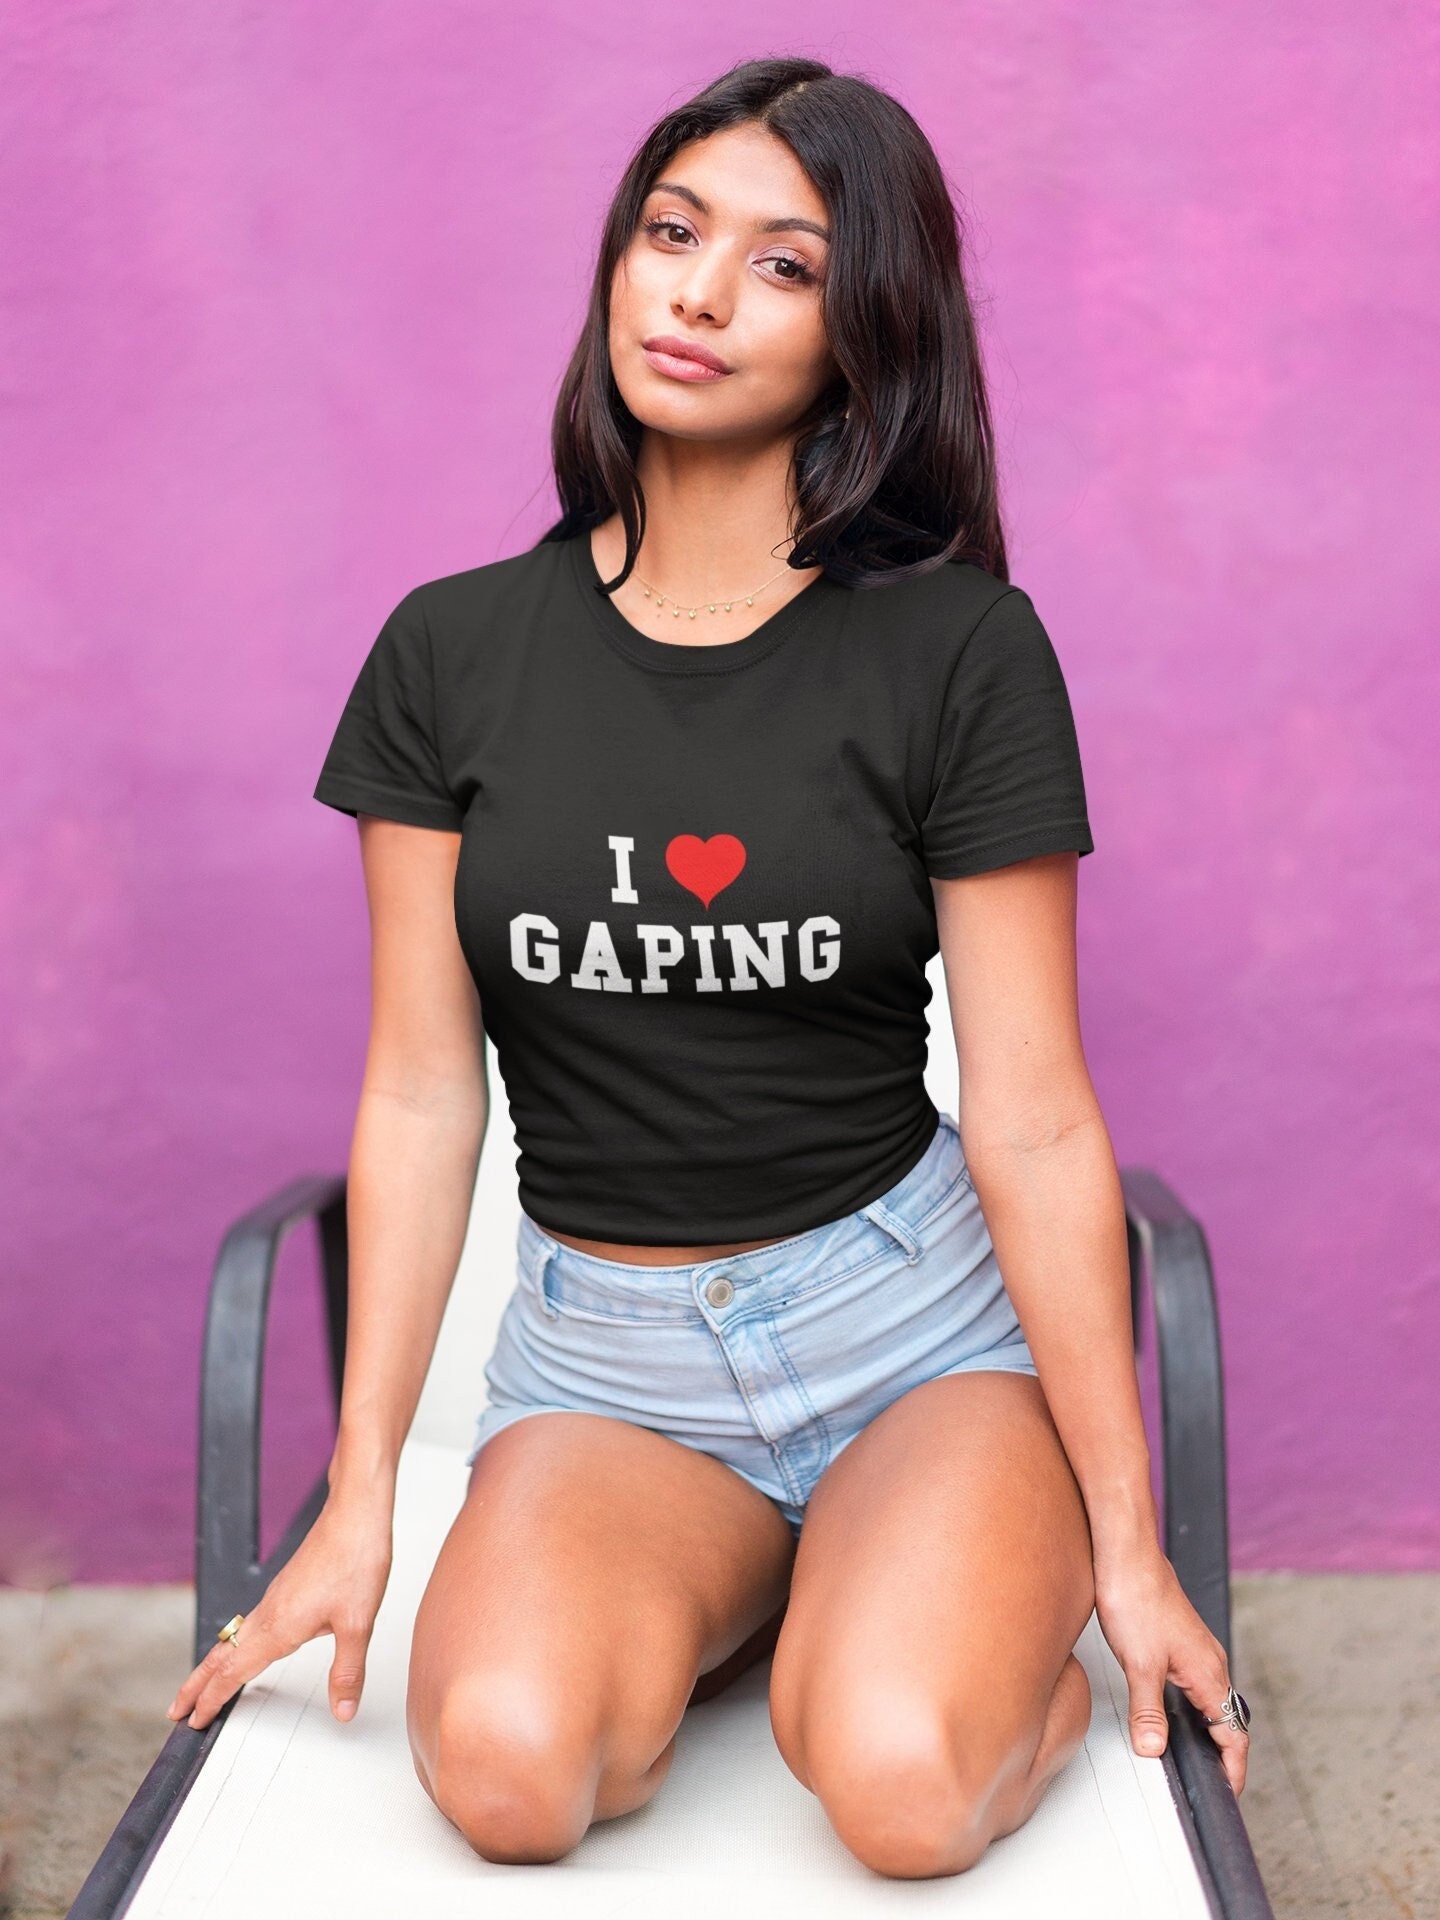 Ik hou van gapend crop top shirt anale dameskleding kont